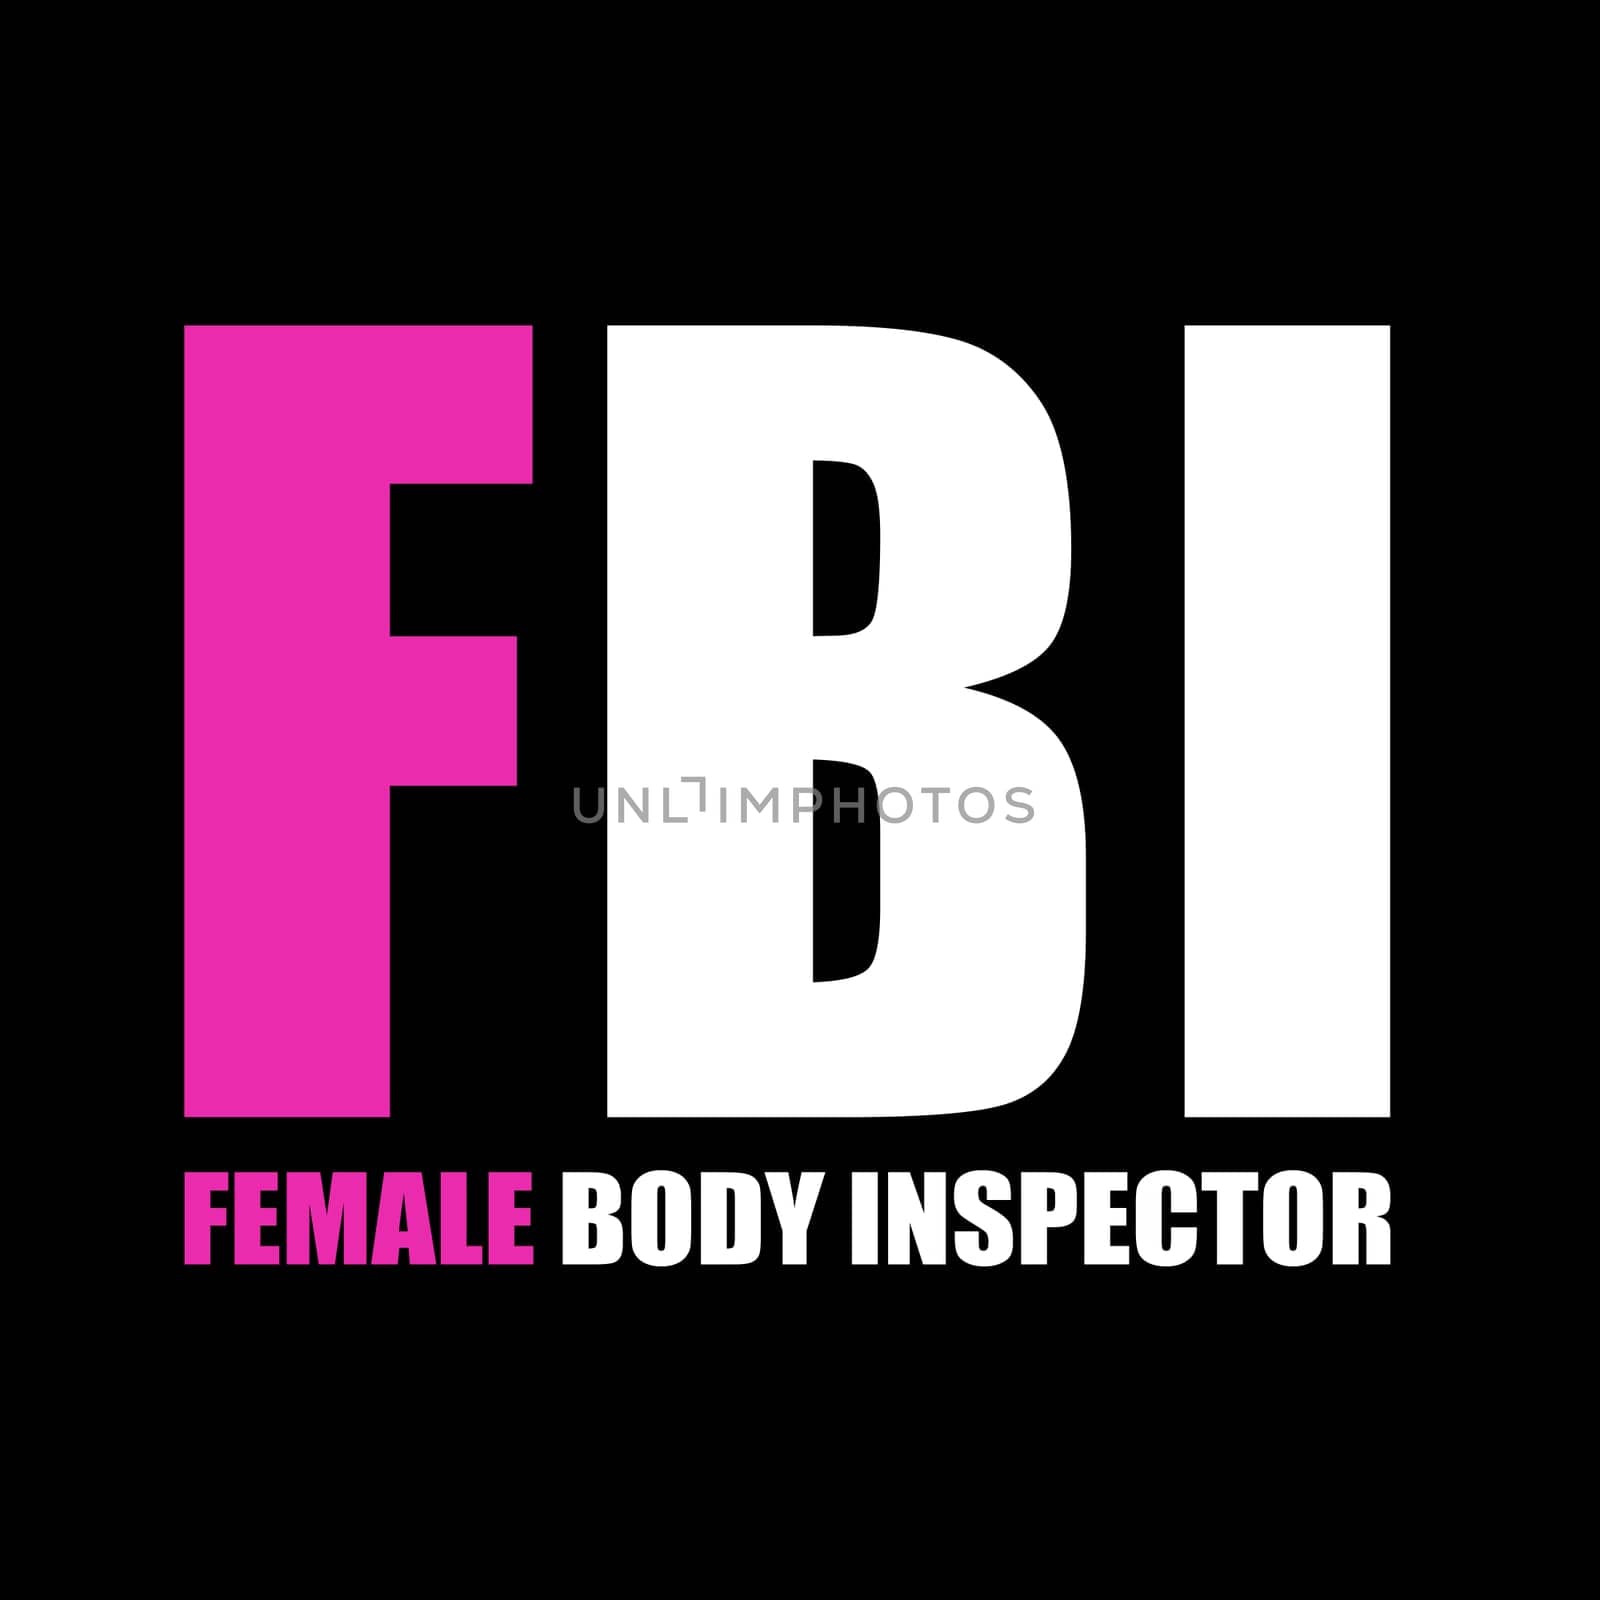 FBI Female Body Inspector